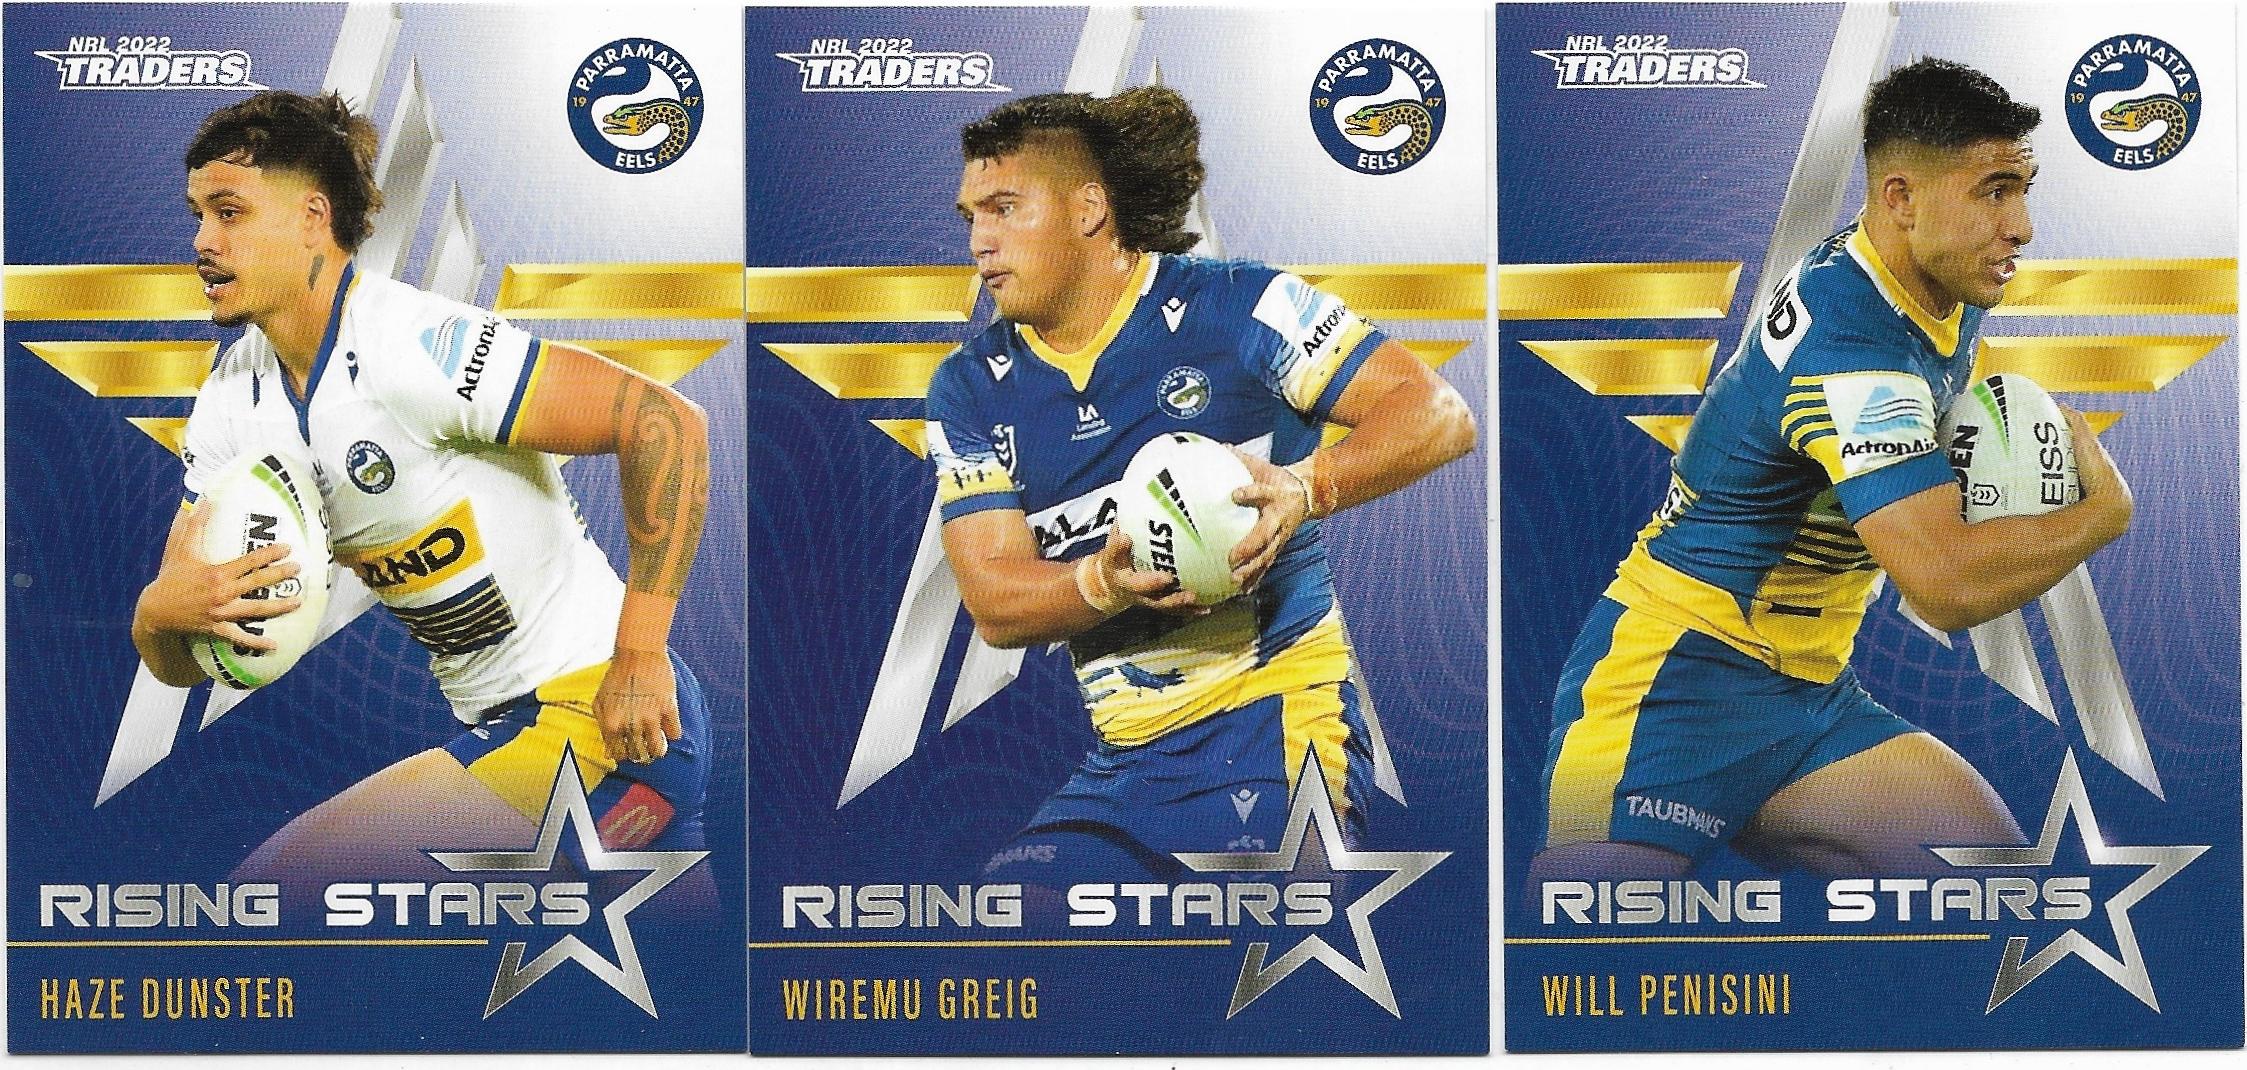 2022 Nrl Traders Rising Stars 3 Card Team Set – Eels